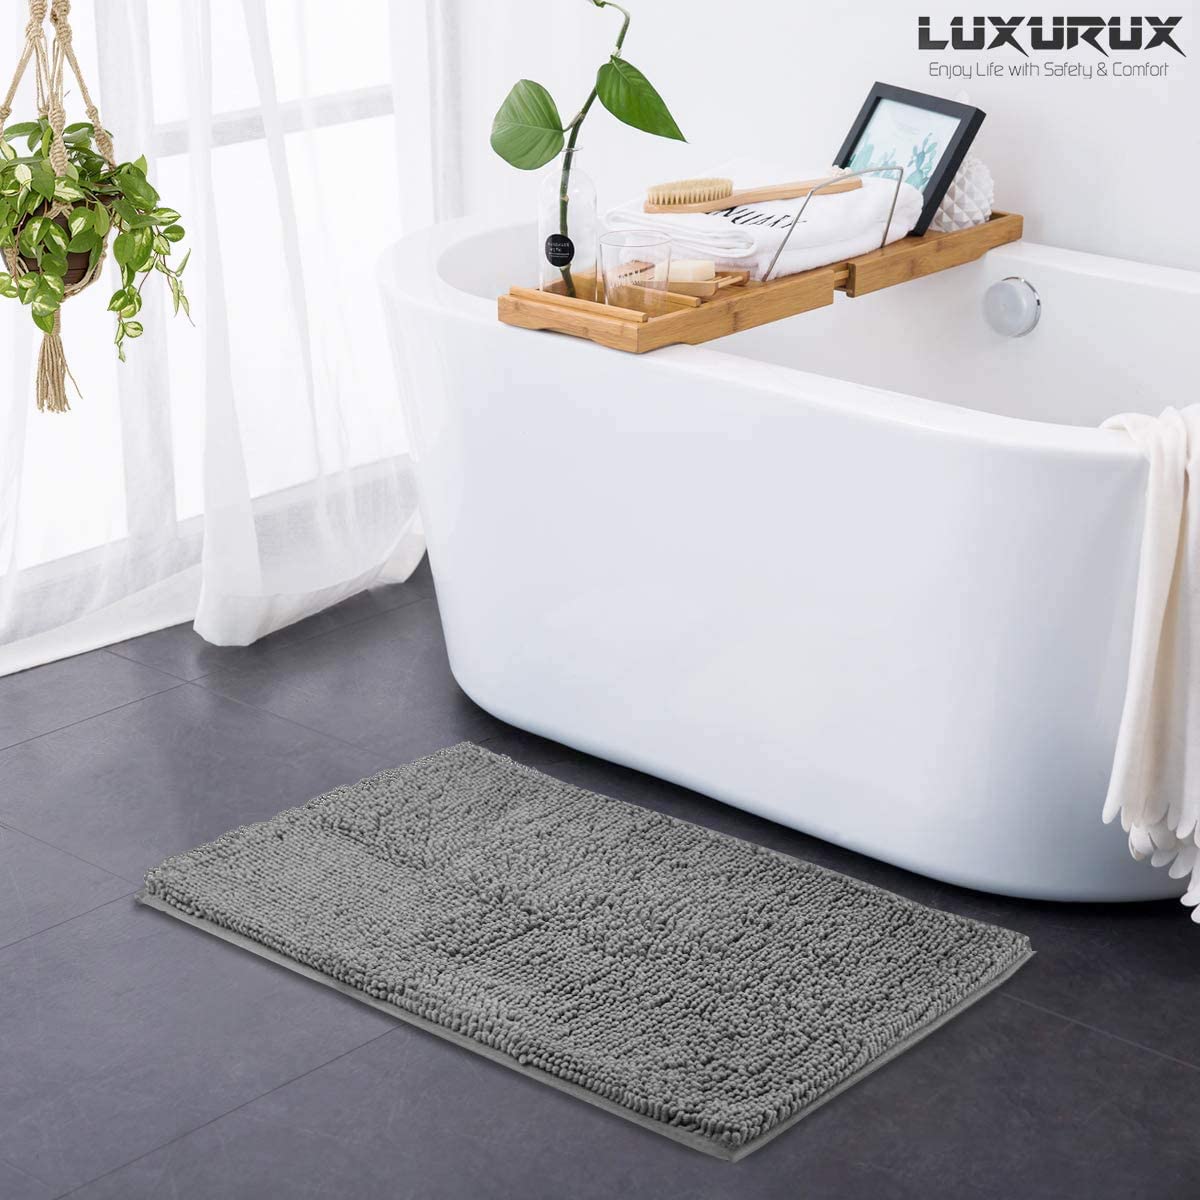 LuxUrux Bath Mat, Extra-Soft Plush Non-Slip Bathroom Rug, Luxury Chenille Microfiber Material, Super Absorbent Shaggy Bath Rug. Machine Wash & Dry (17 x 24, Light Grey)  - Very Good